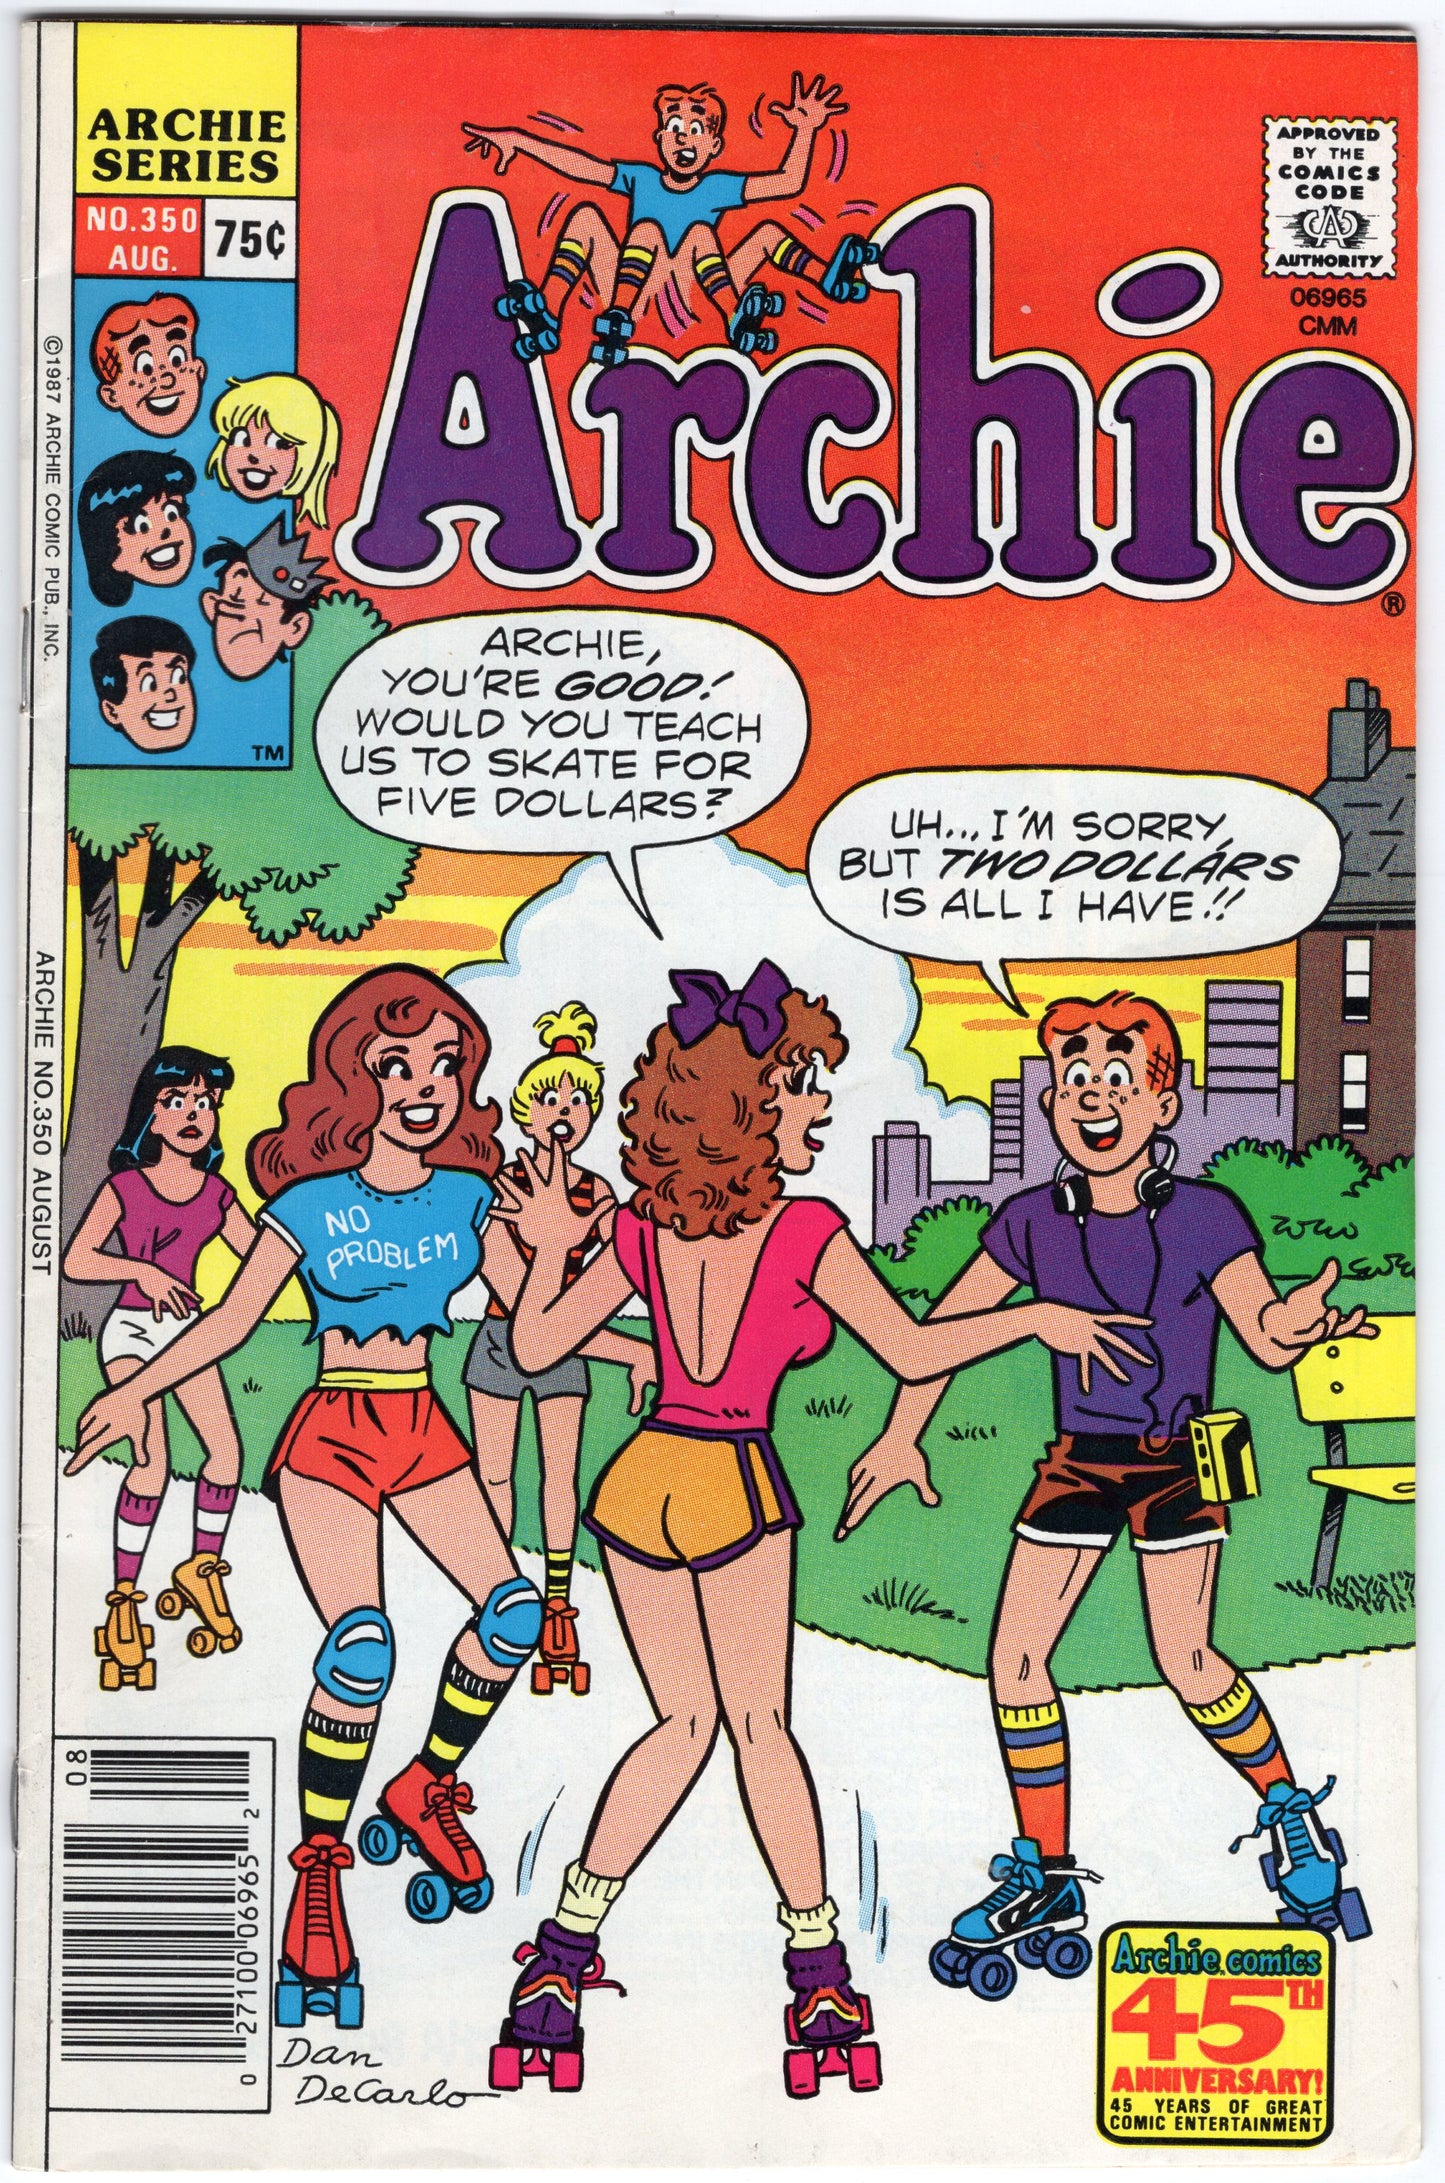 Archie - Issue #350 (Aug. 1987 - Archie Comics / Publications) FN